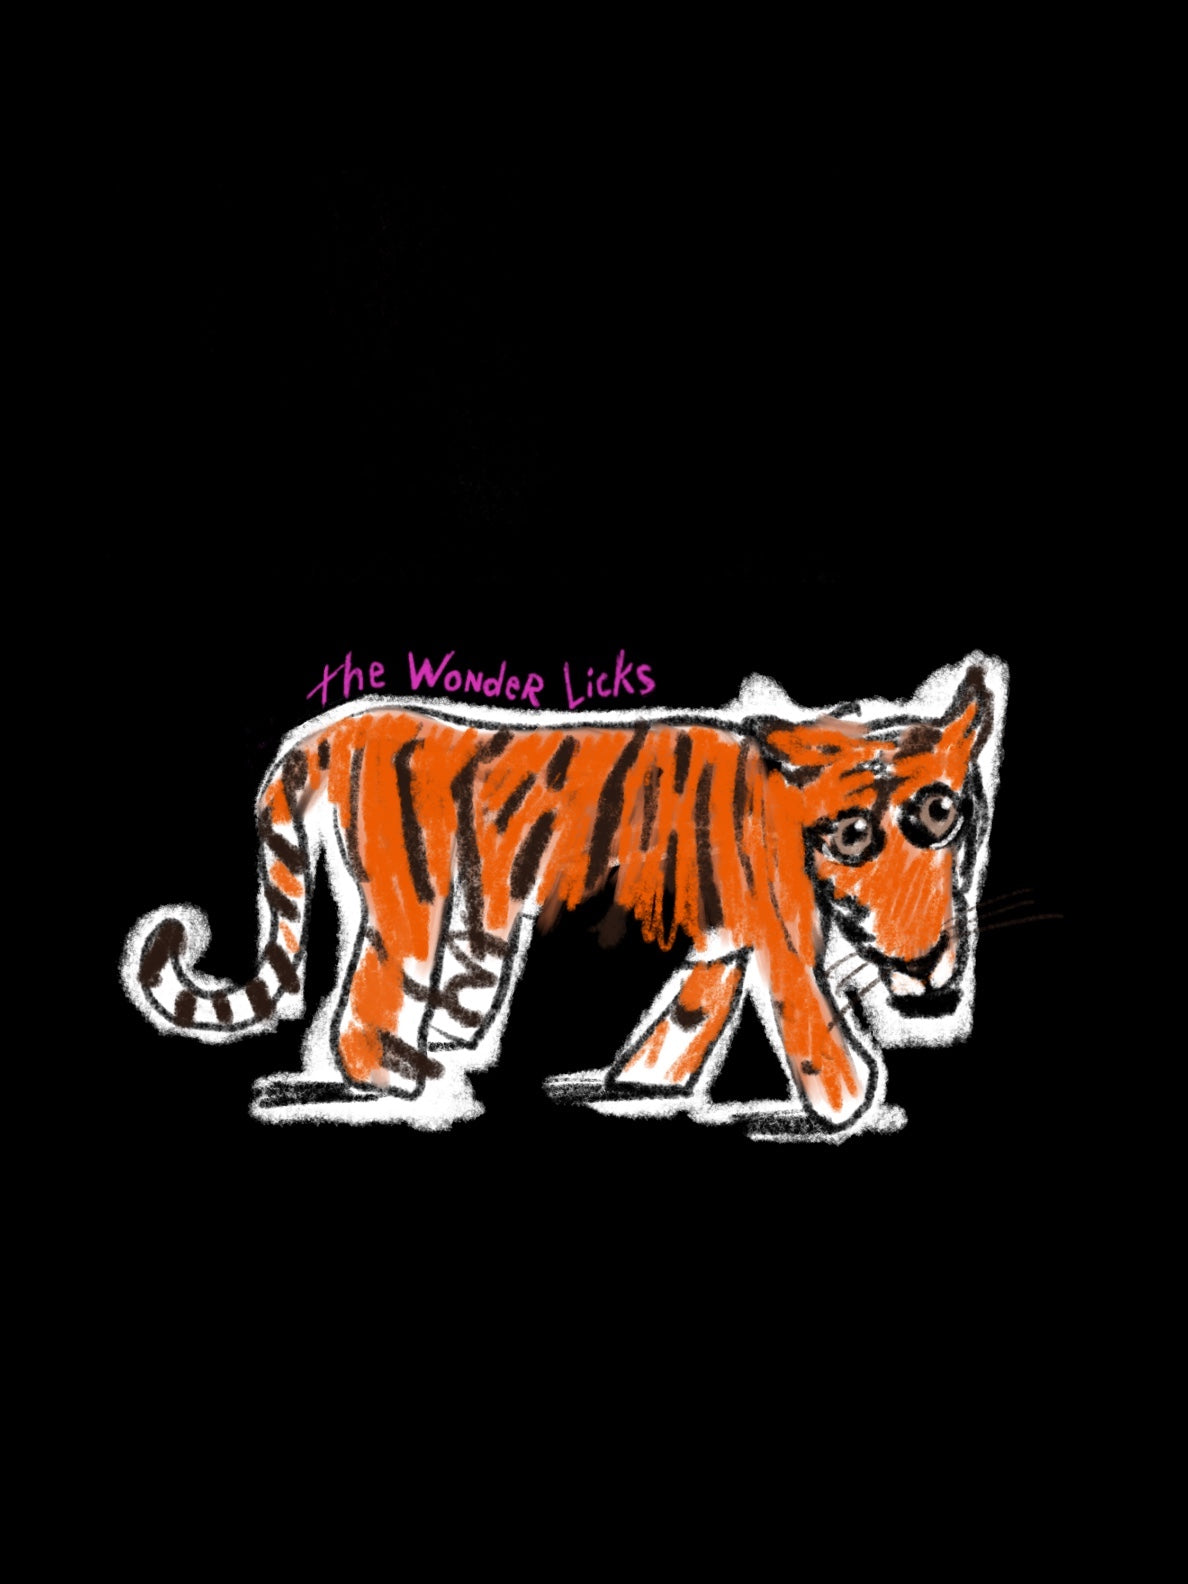 The Wonder Licks "Tiger" T-Shirt